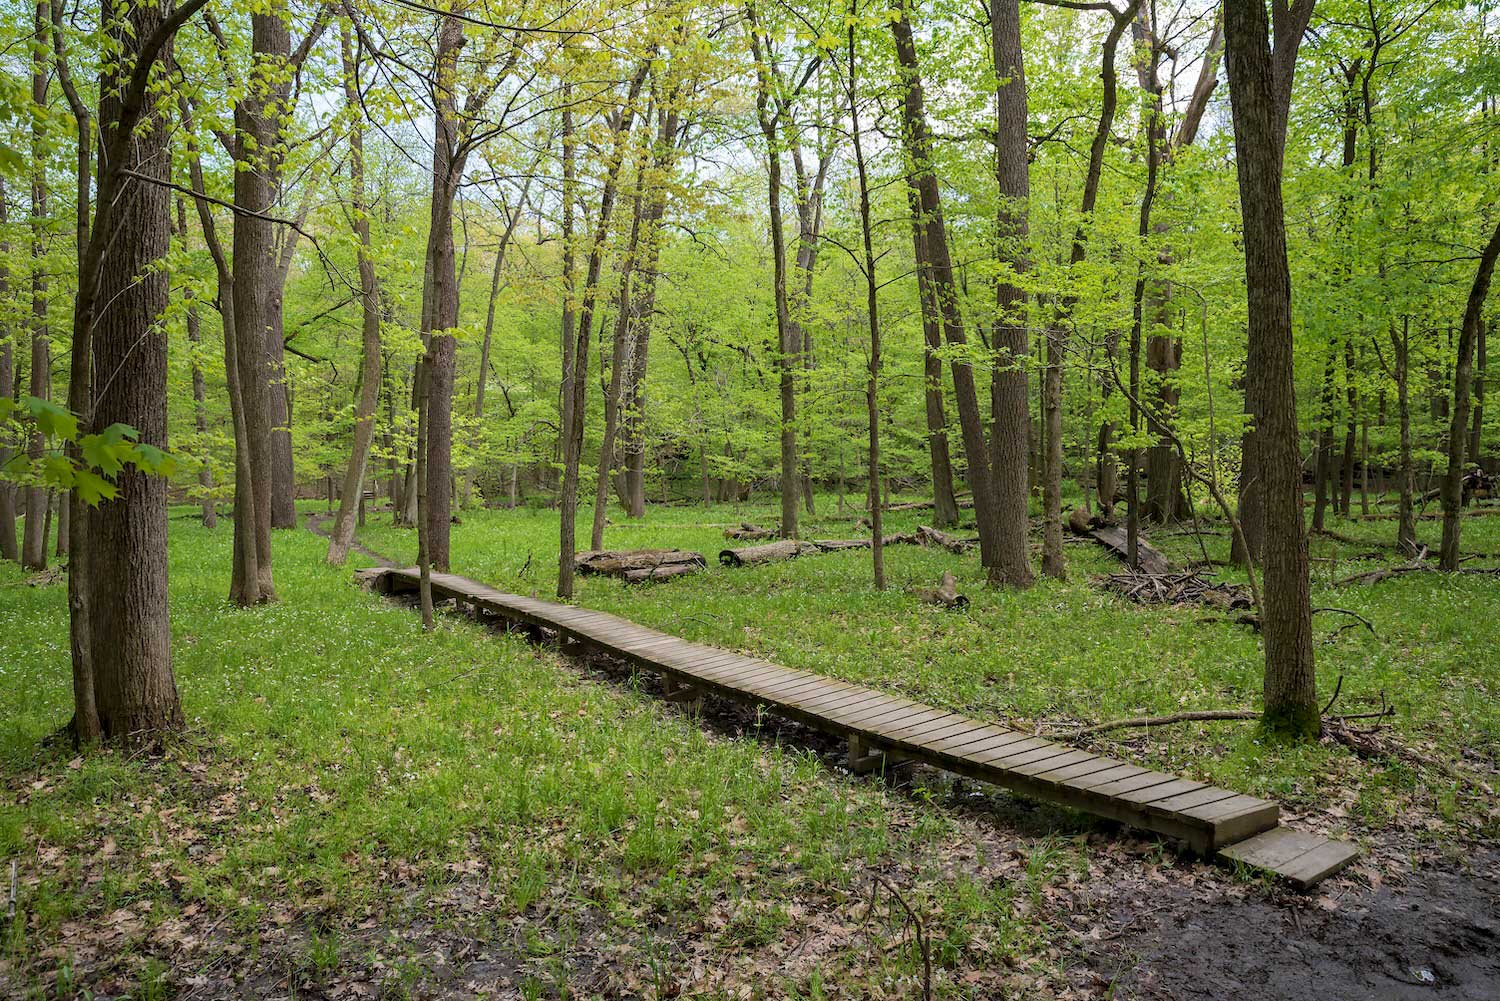 A wooden boardwalk trail through a forest.